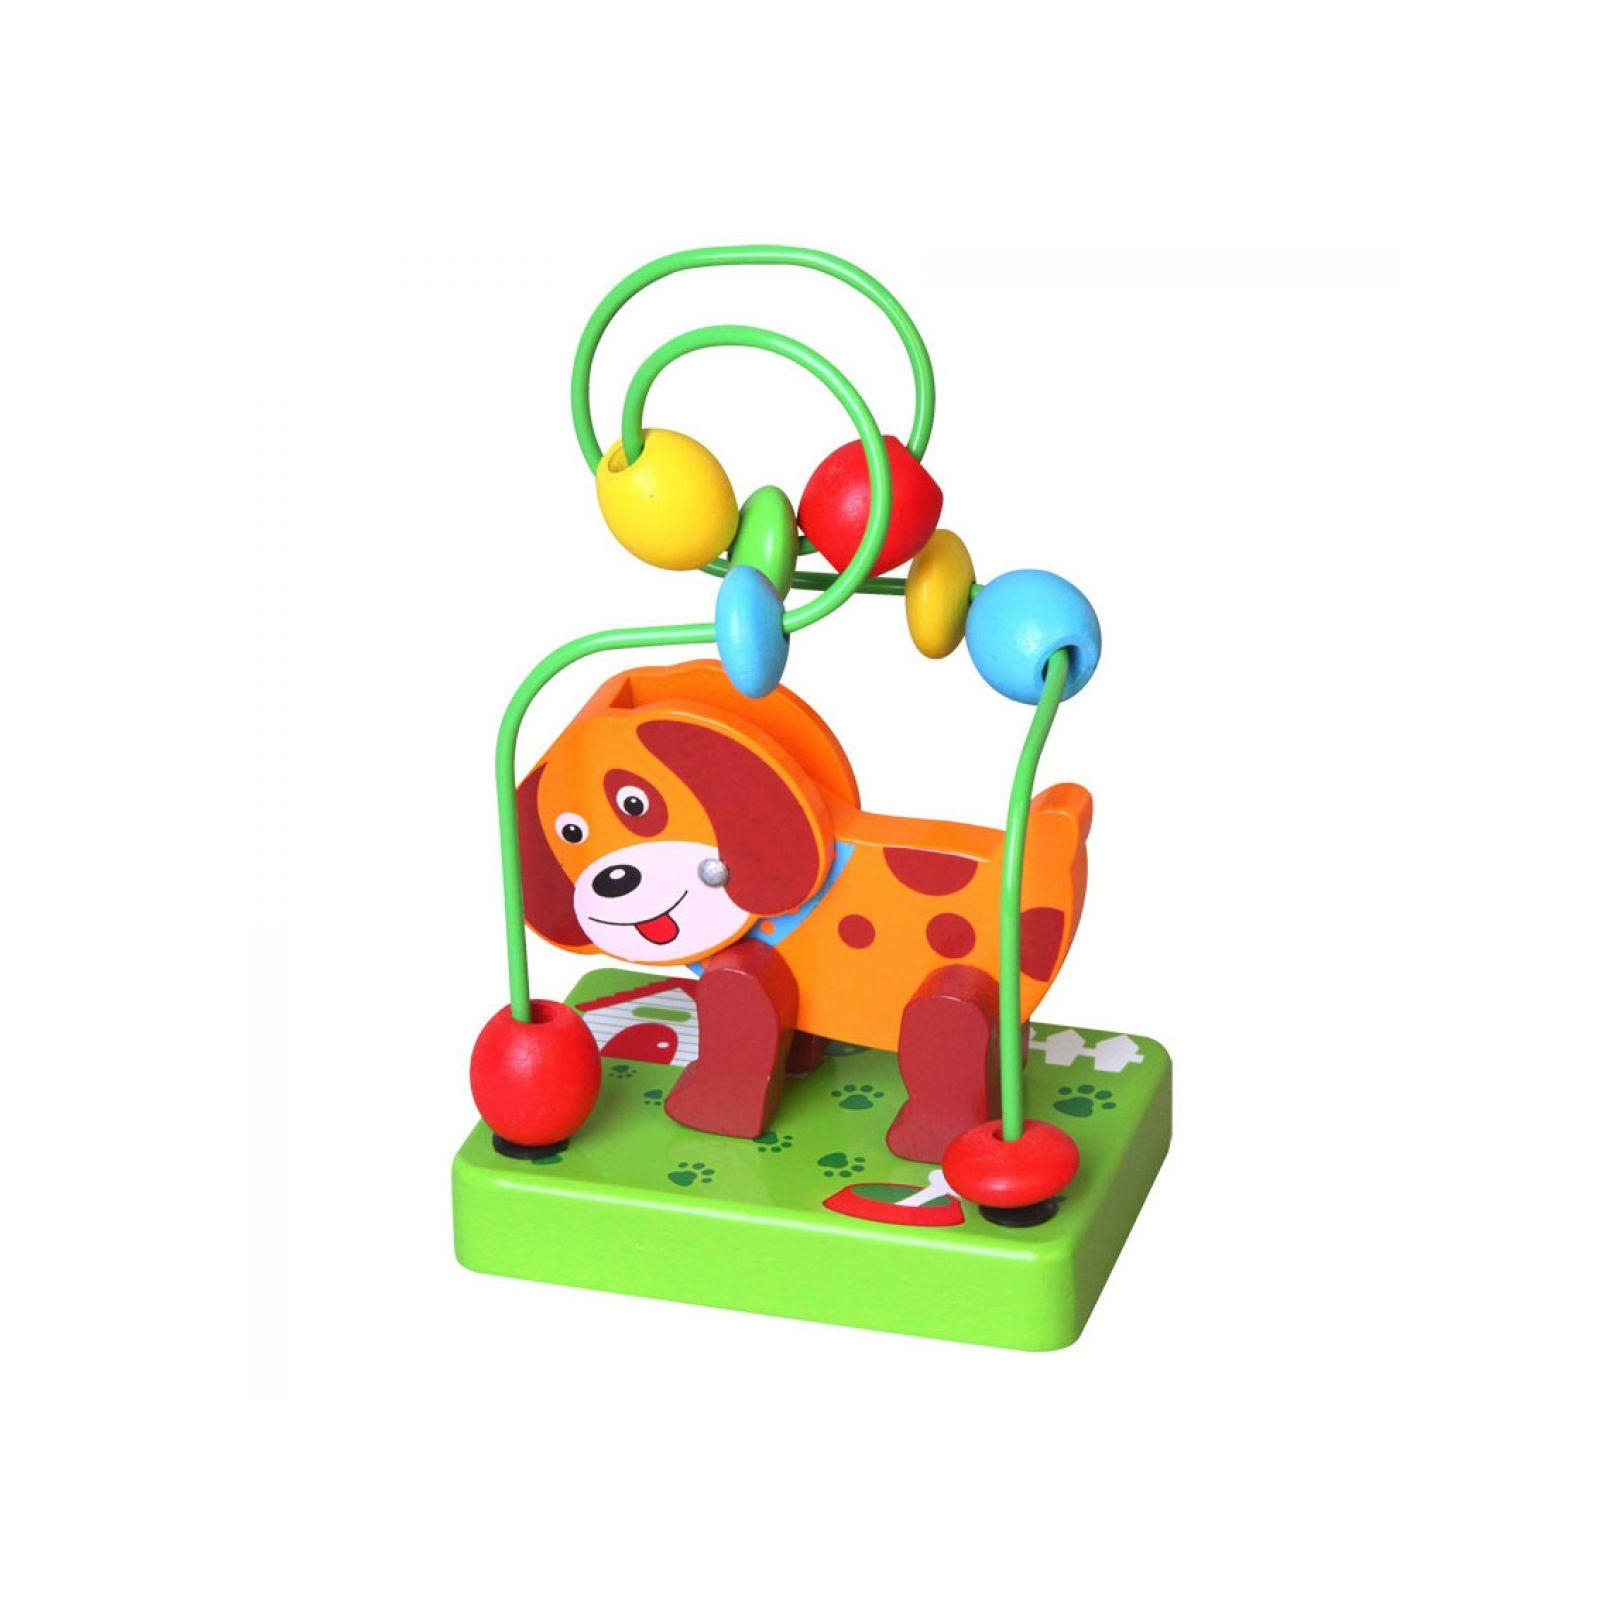 Развивающая игрушка Viga Toys Мини-лабиринт Собачка (59662)